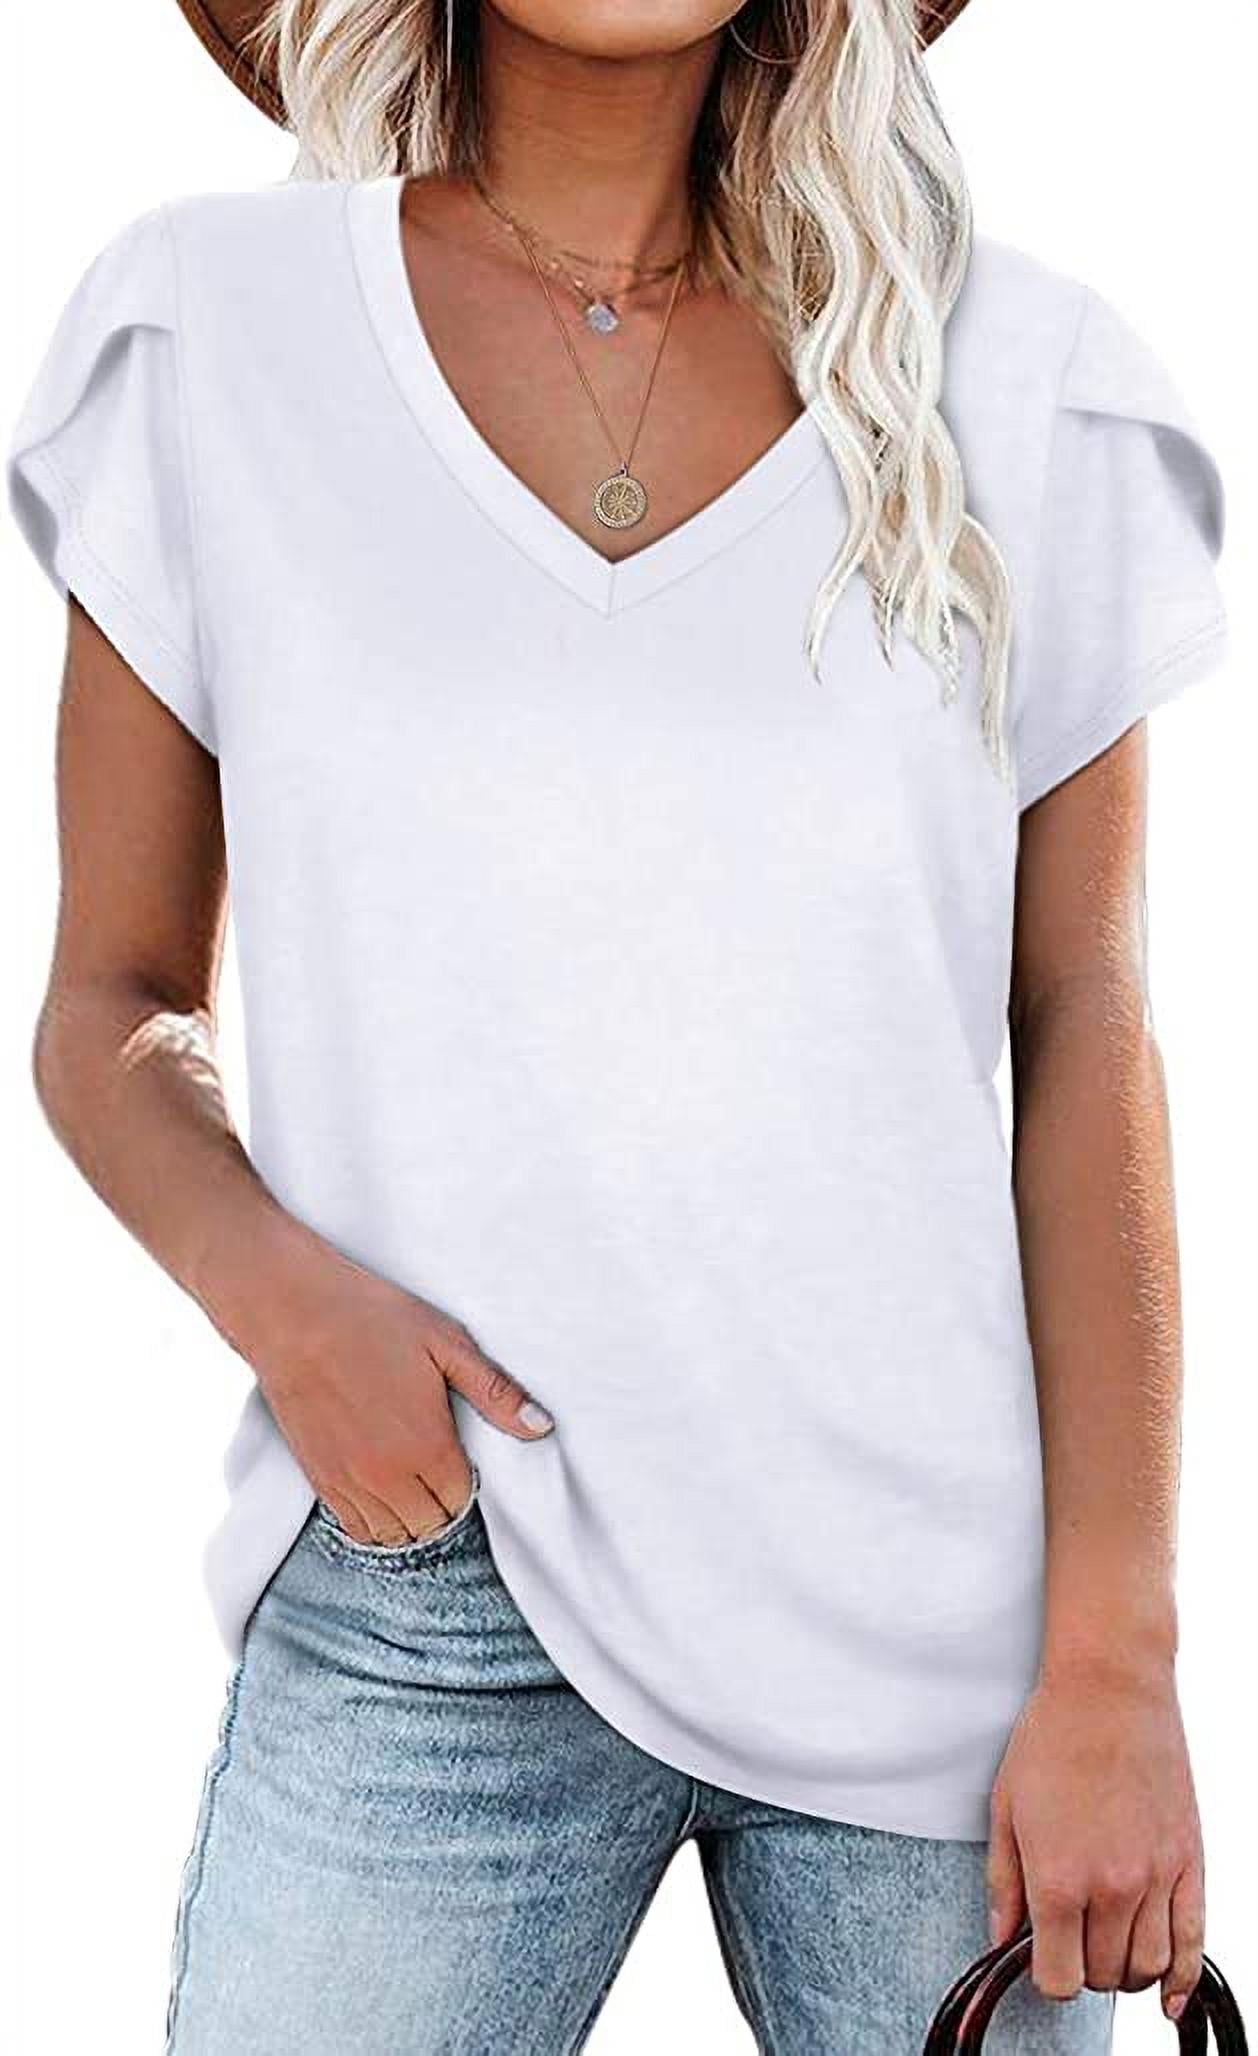 WIHOLL Womens T Shirts Short Sleeve V Neck Plain Summer Tops